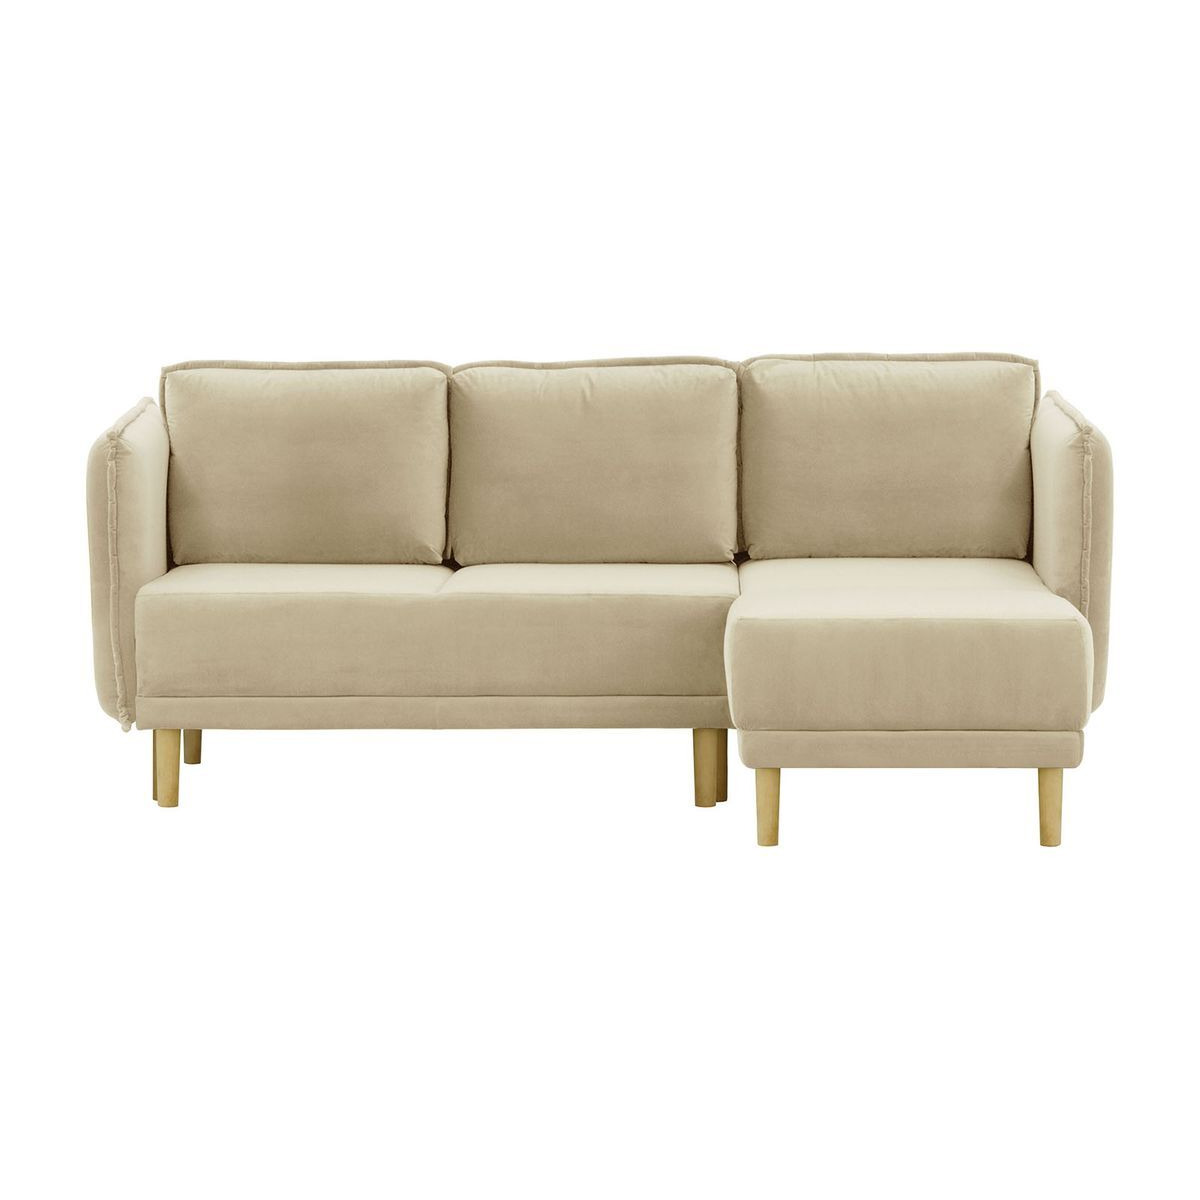 Swift Corner Sofa Bed, light beige - image 1